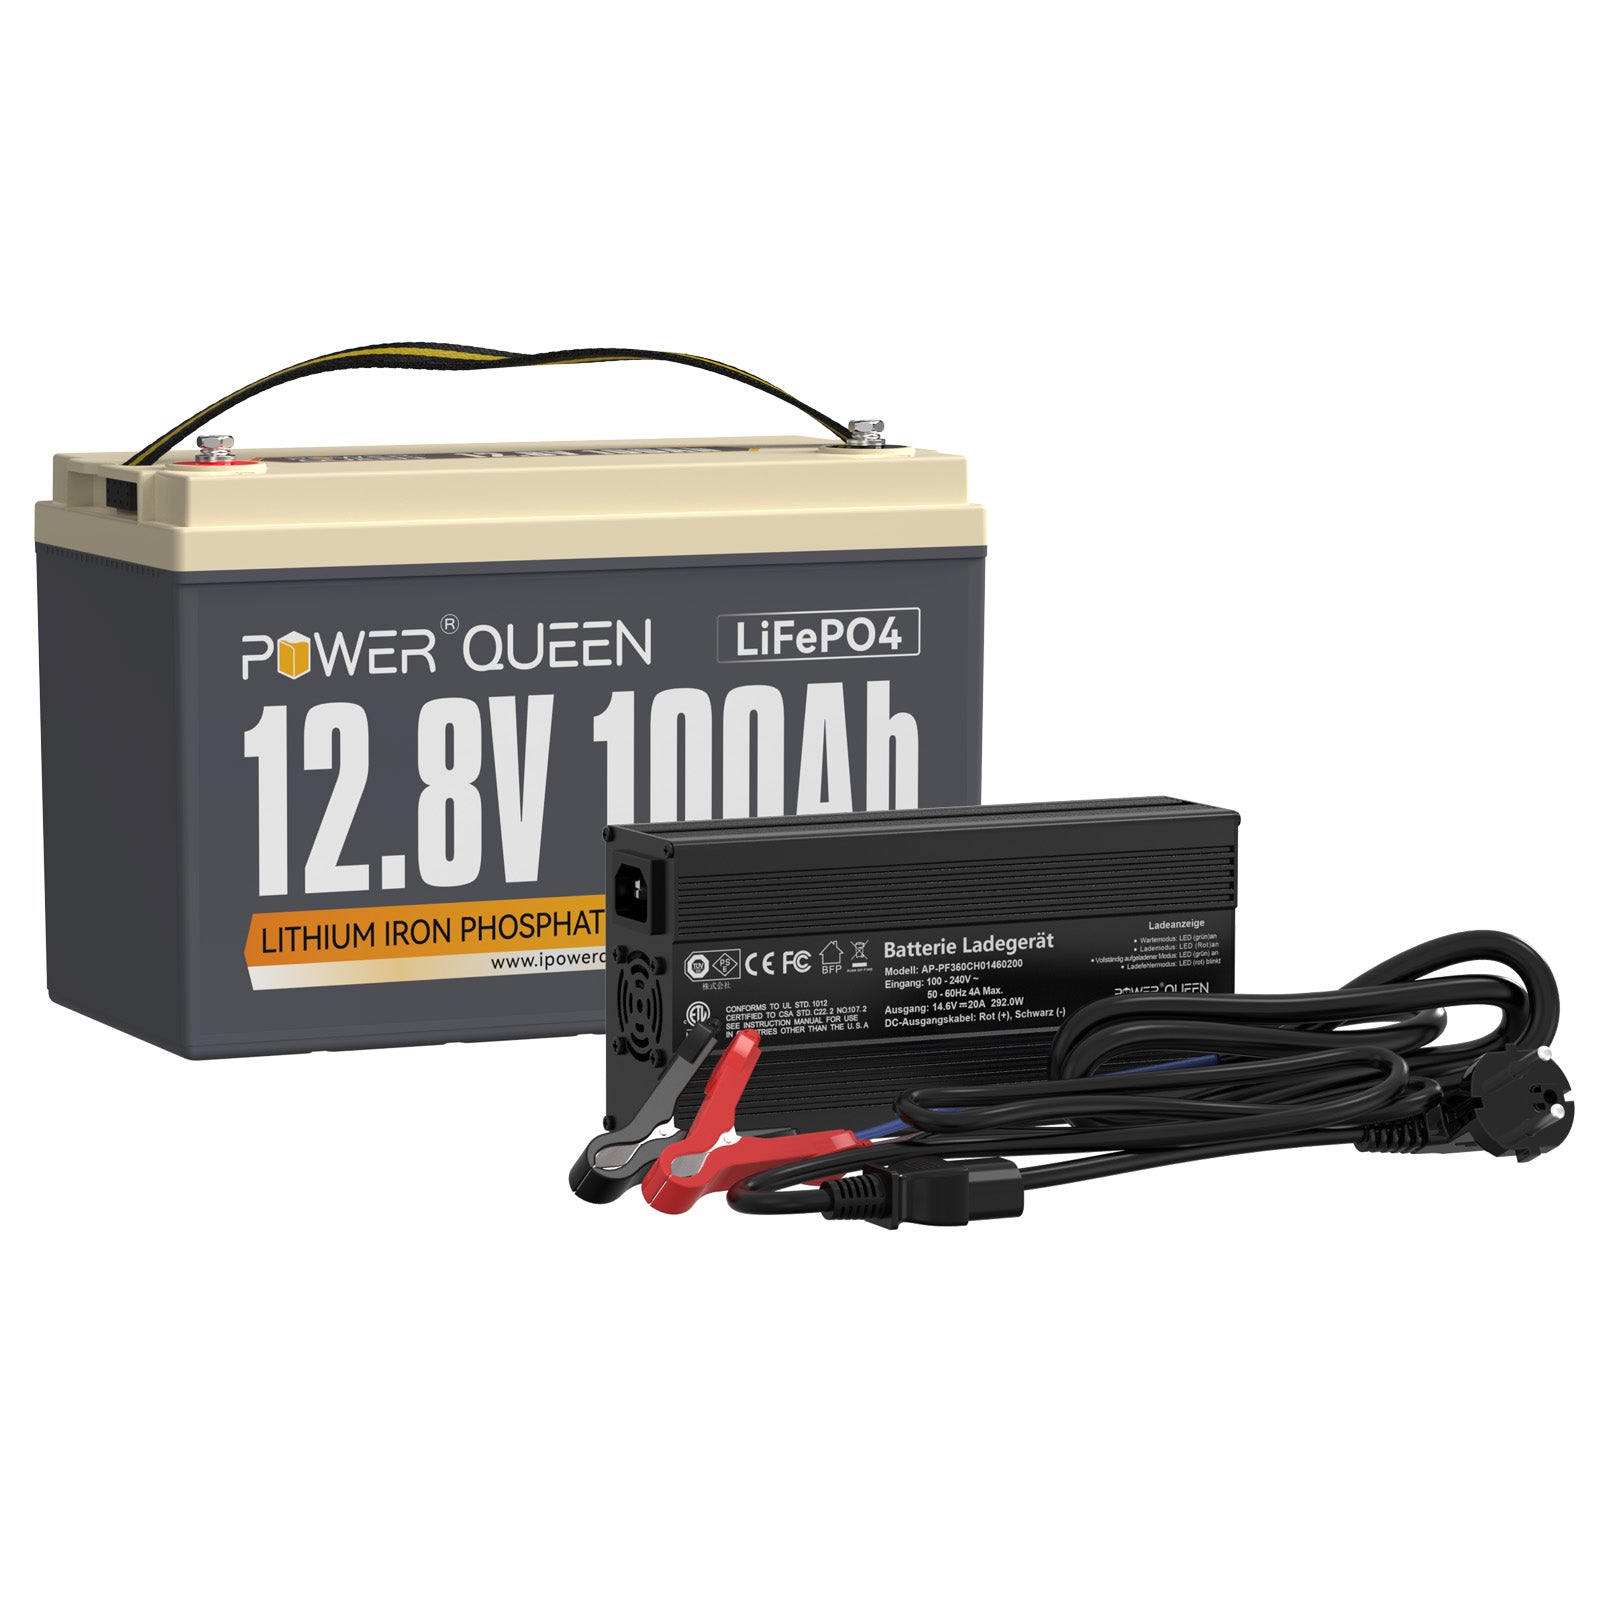 Power Queen 12,8V 100Ah LiFePO4-Akku mit 14,6V 20A LiFePO4 Ladegerät